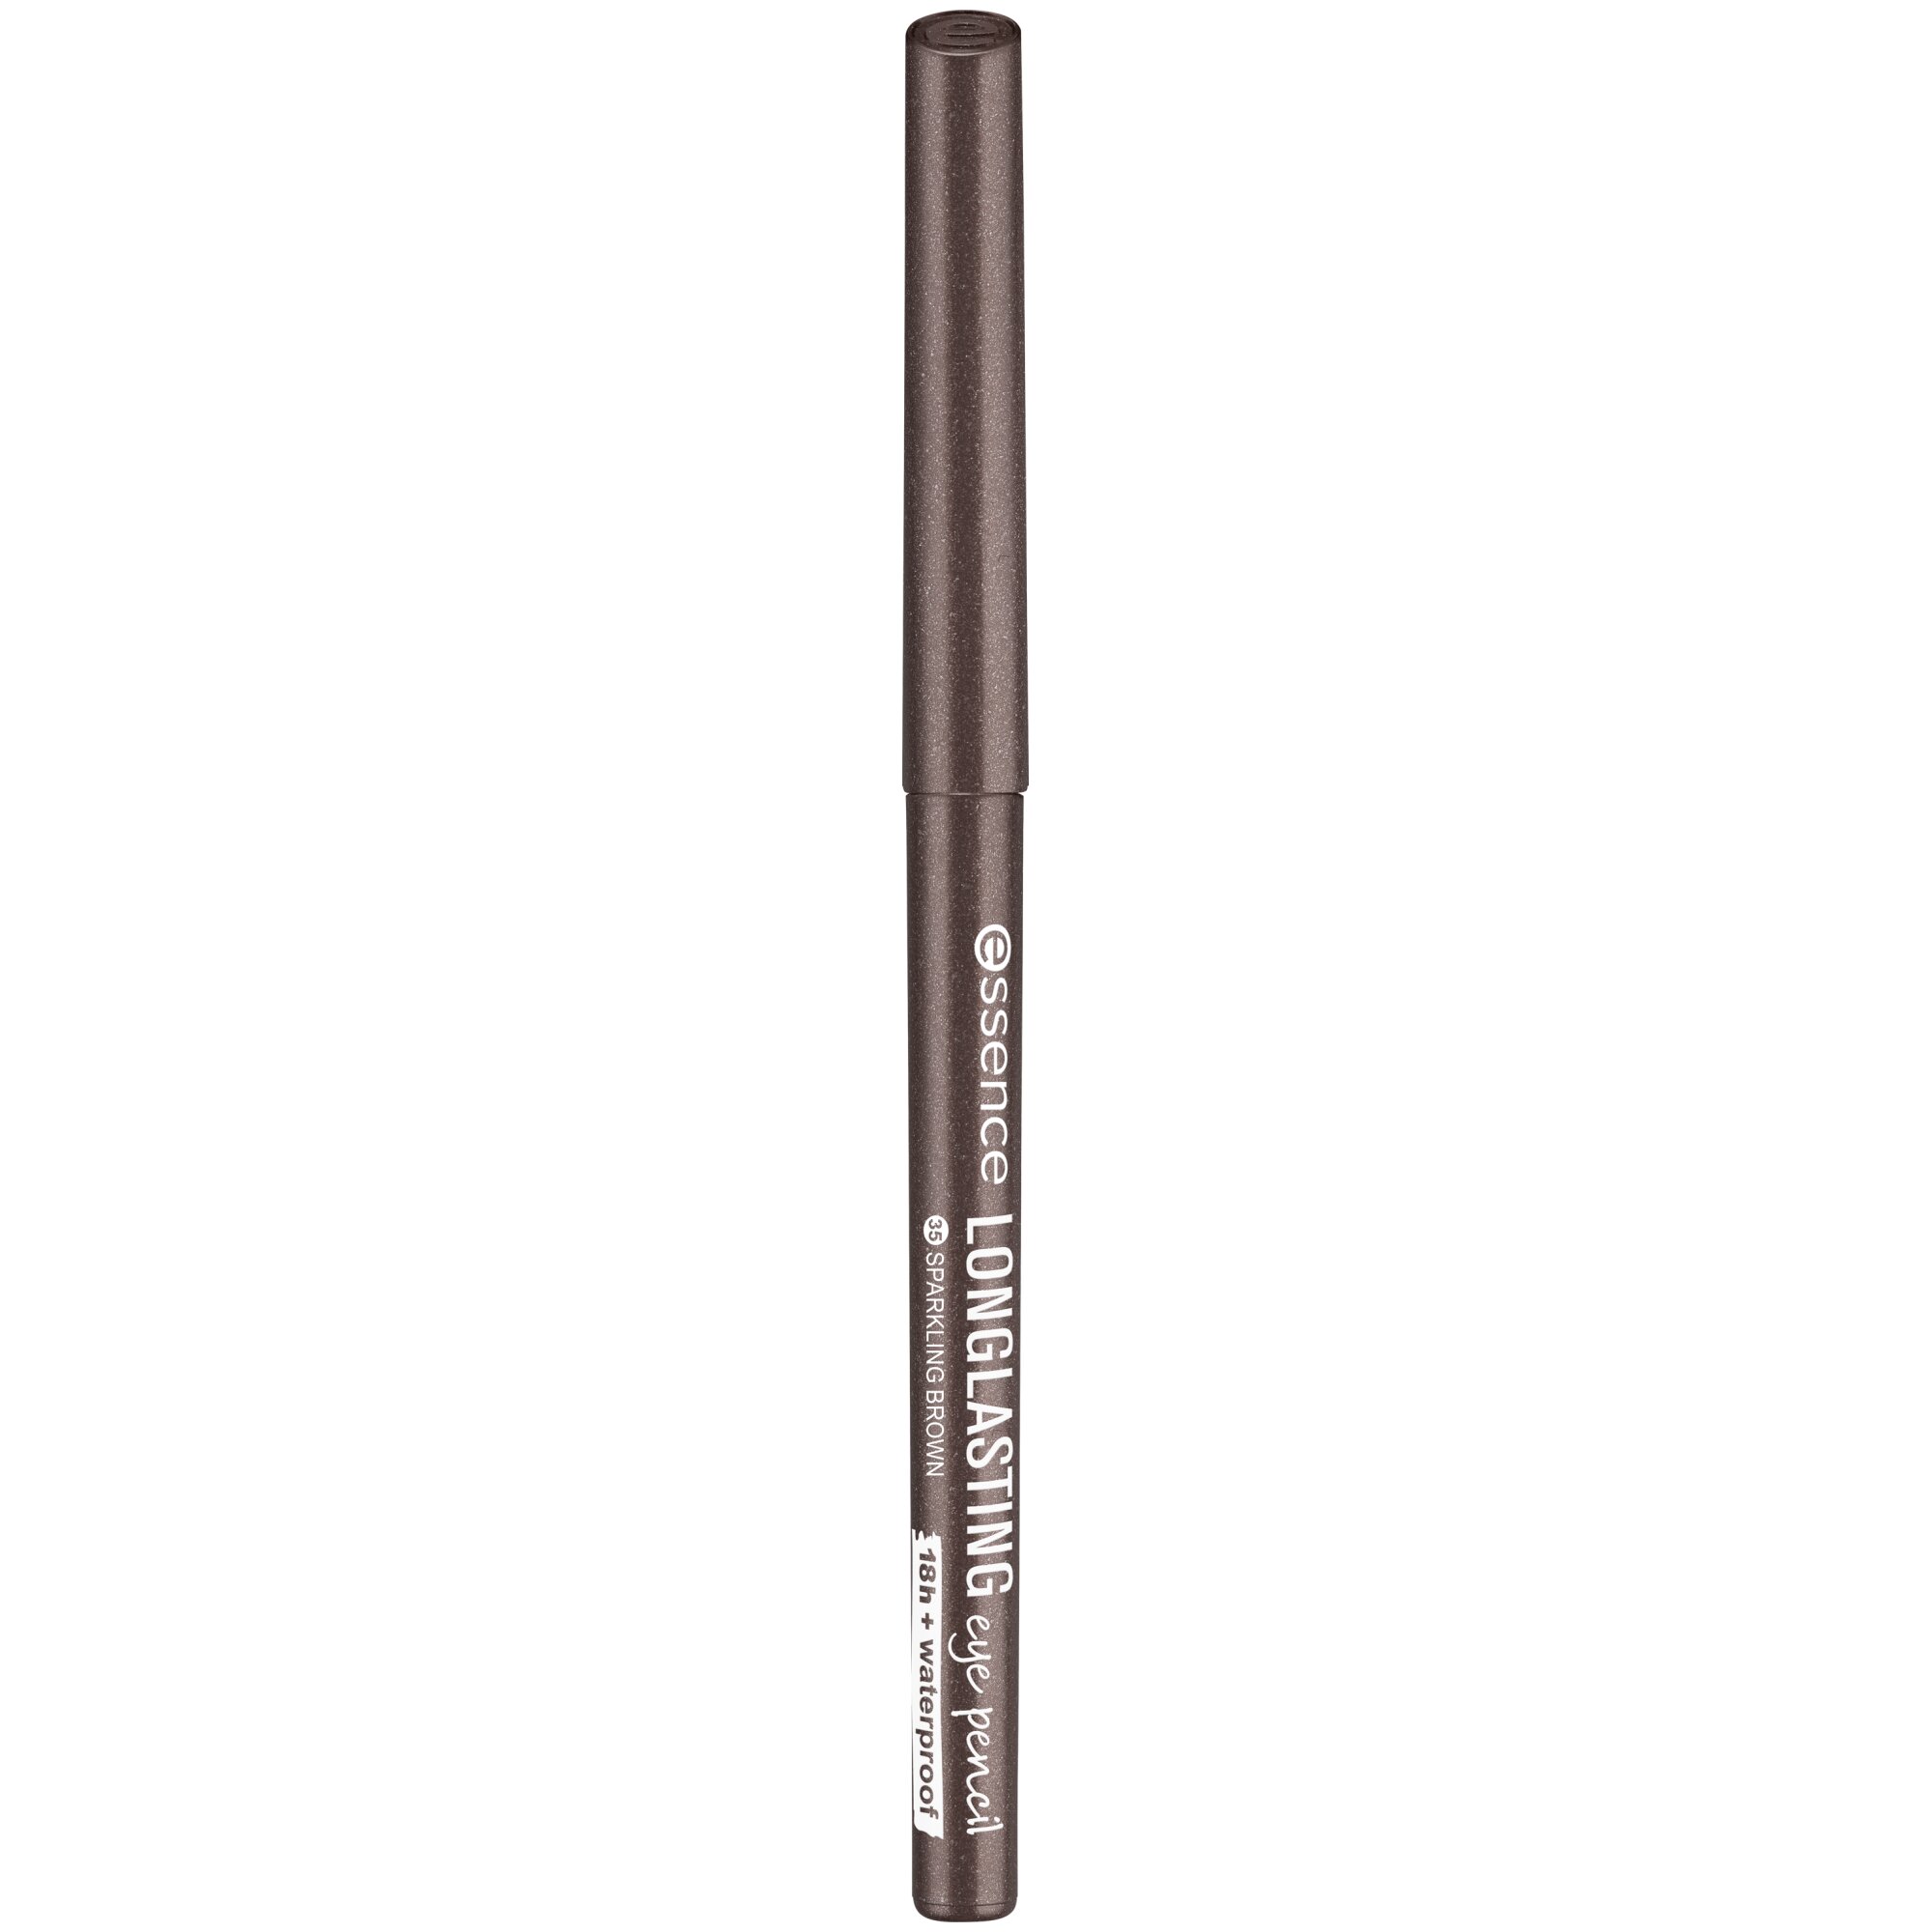 Creion pentru ochi Long-Lasting, 35 - Sparkling Brown, 0.28 g, Essence